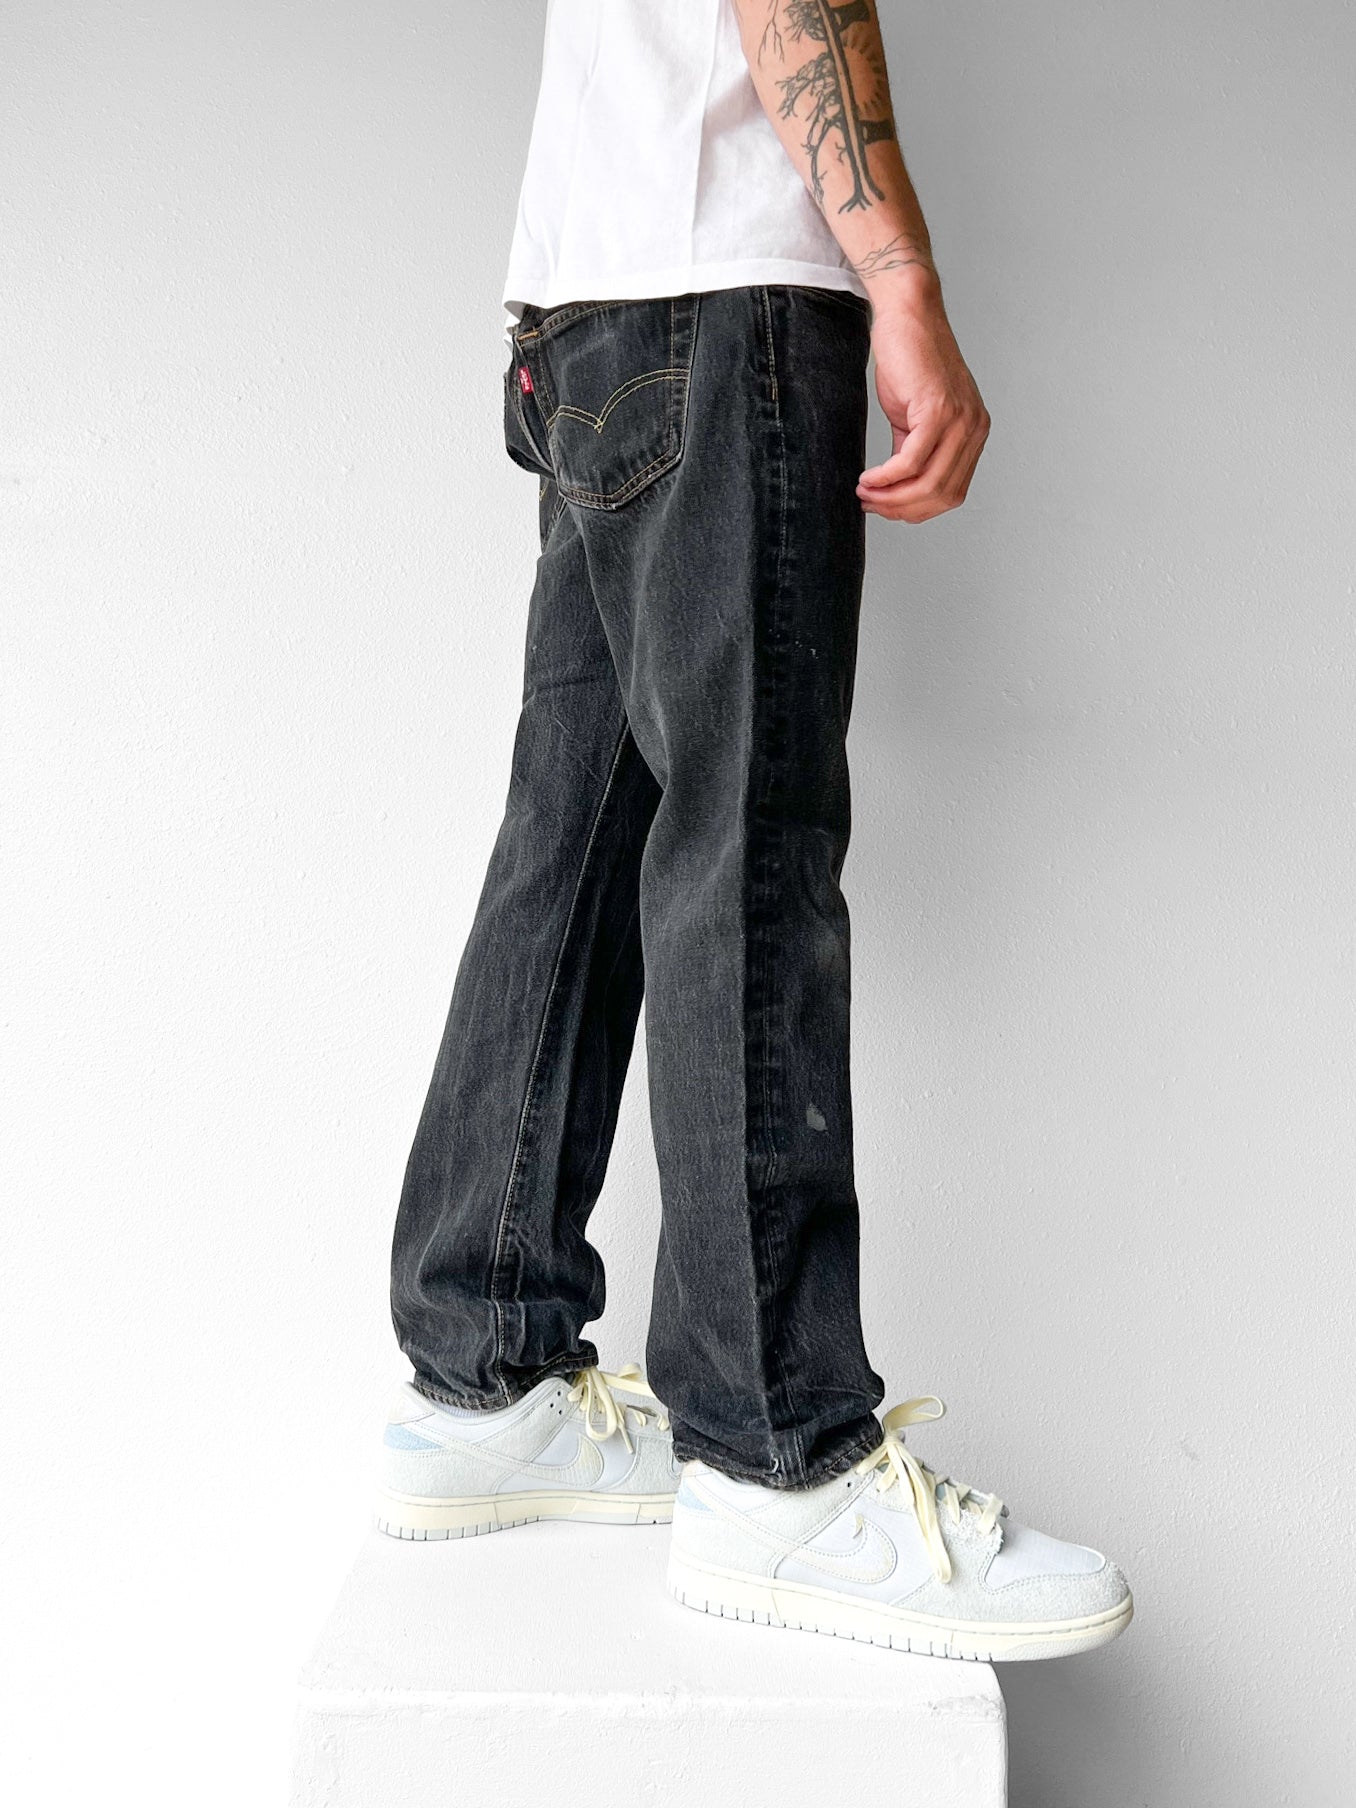 Levi’s 501 Dark-wash Jeans - 32 x 32